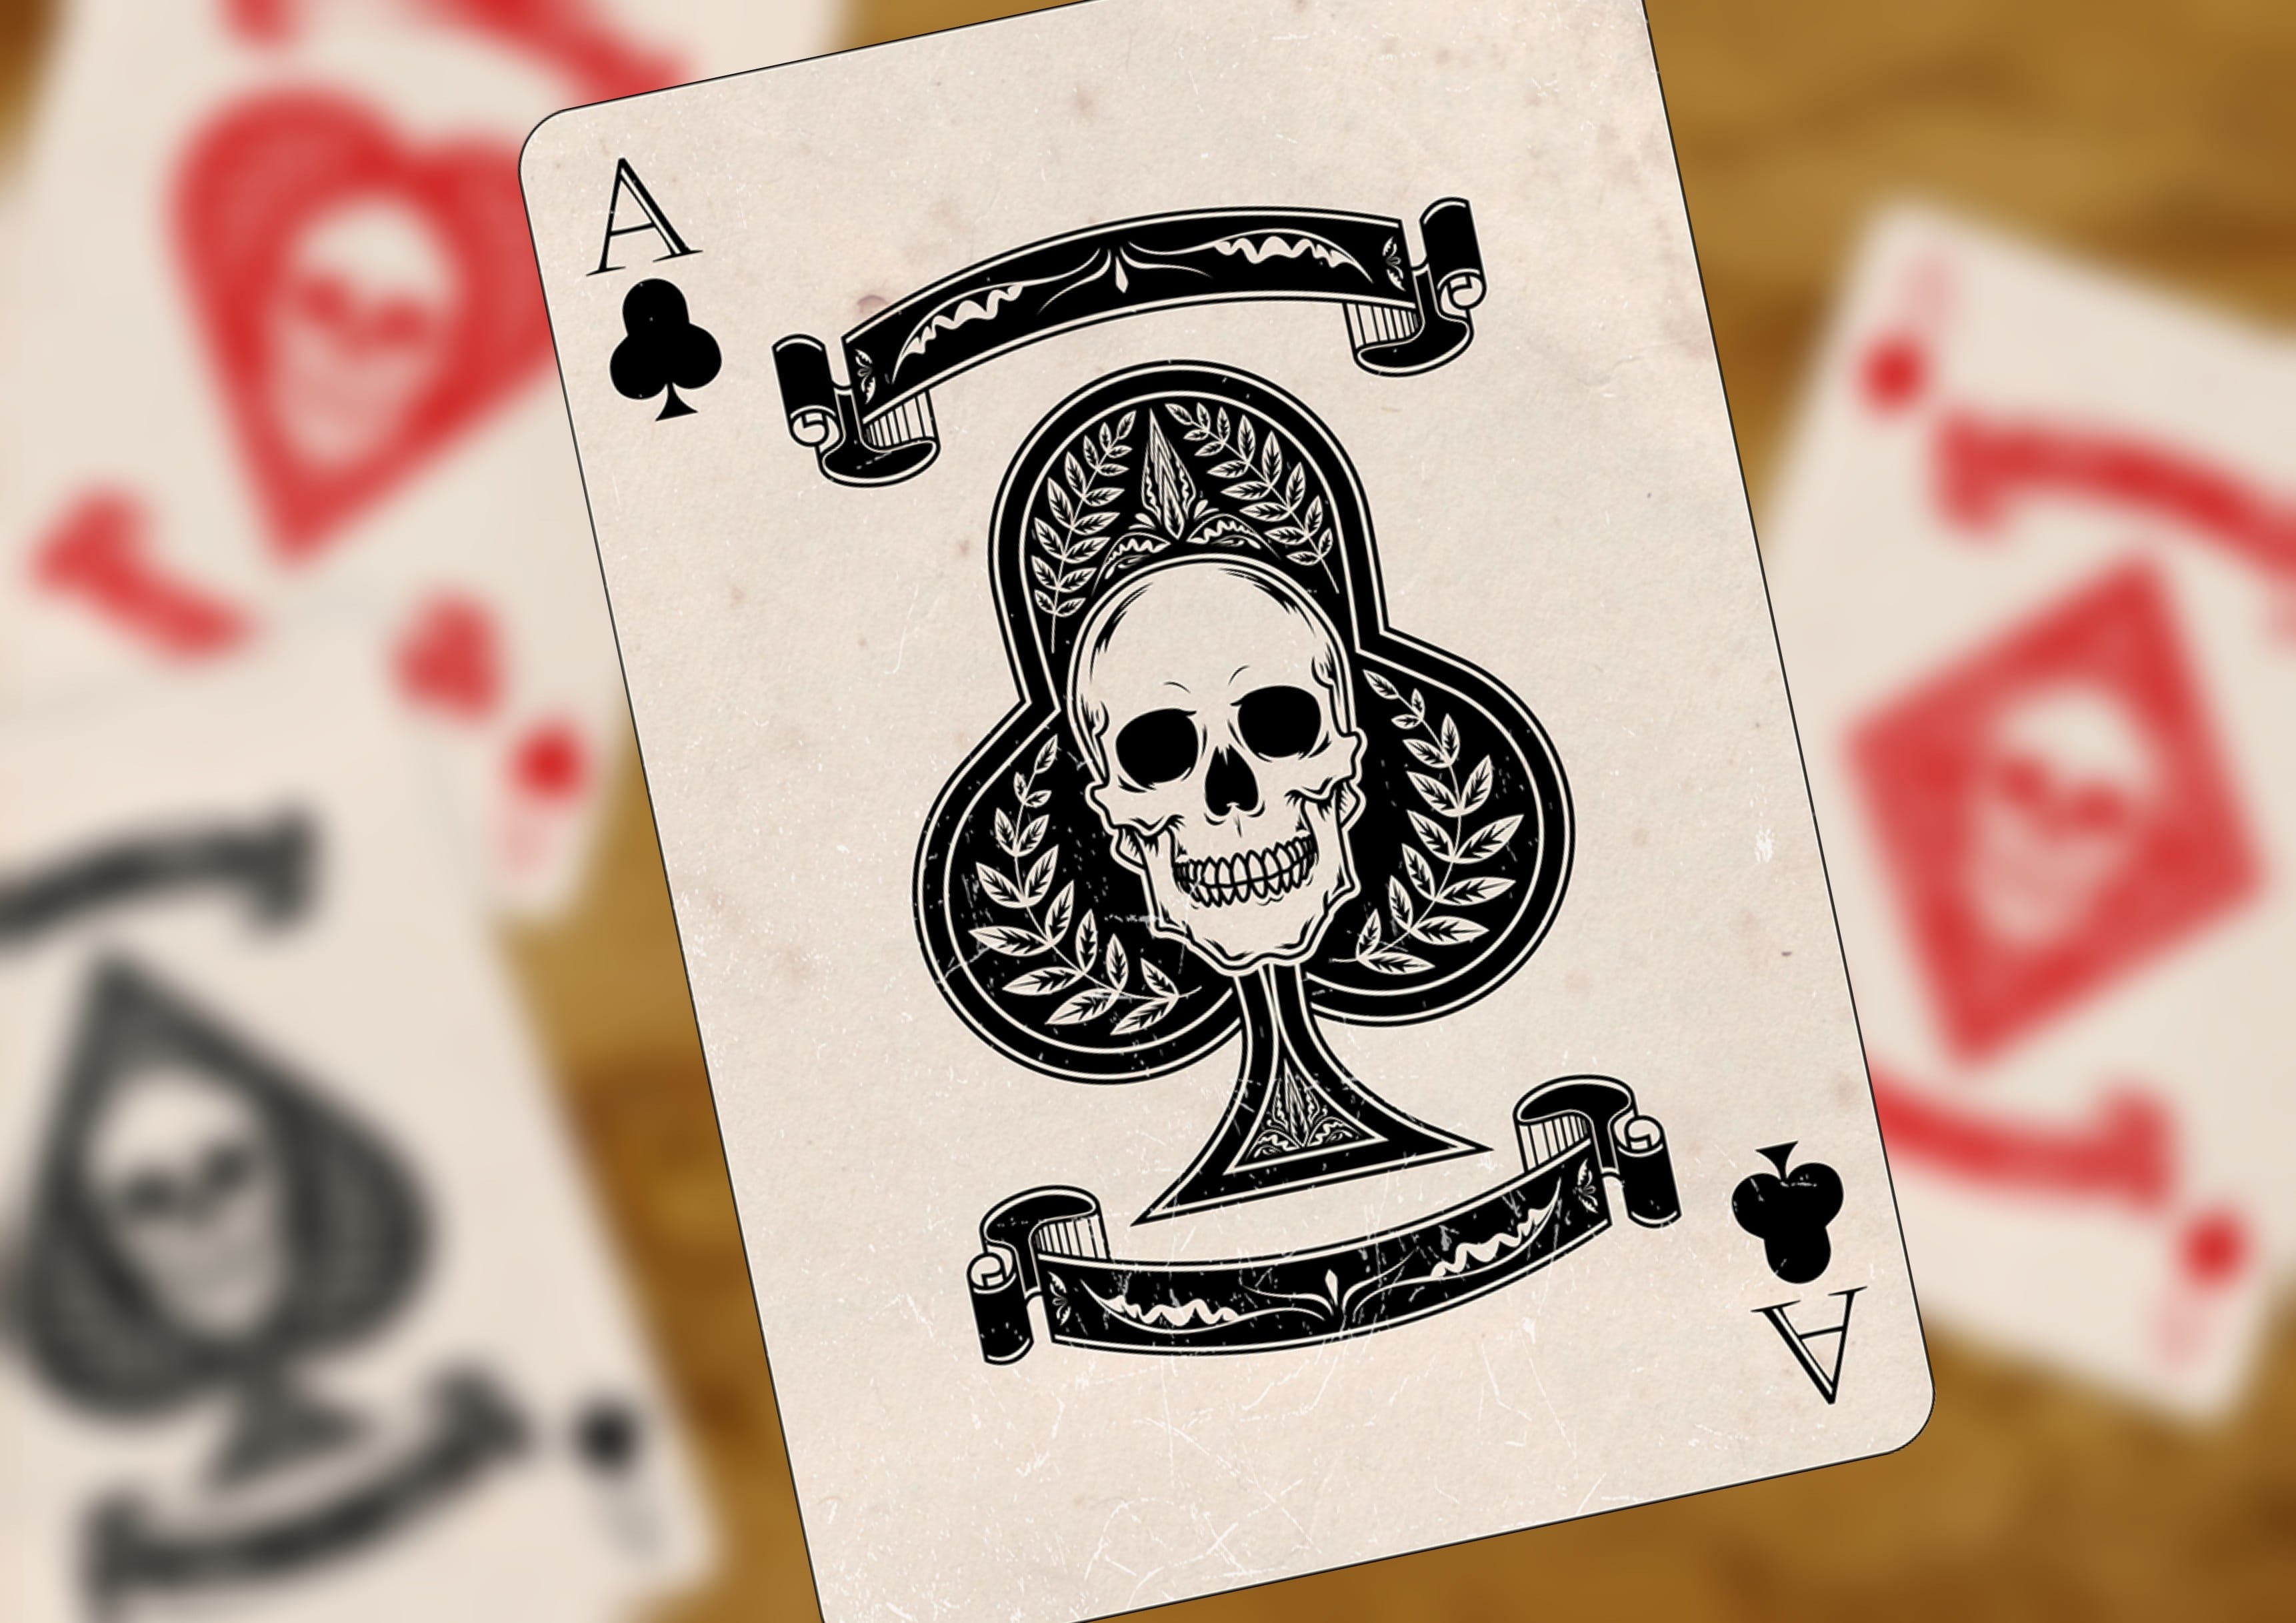 Ace playing card, playing cards, heart, cross, pik, diamonds